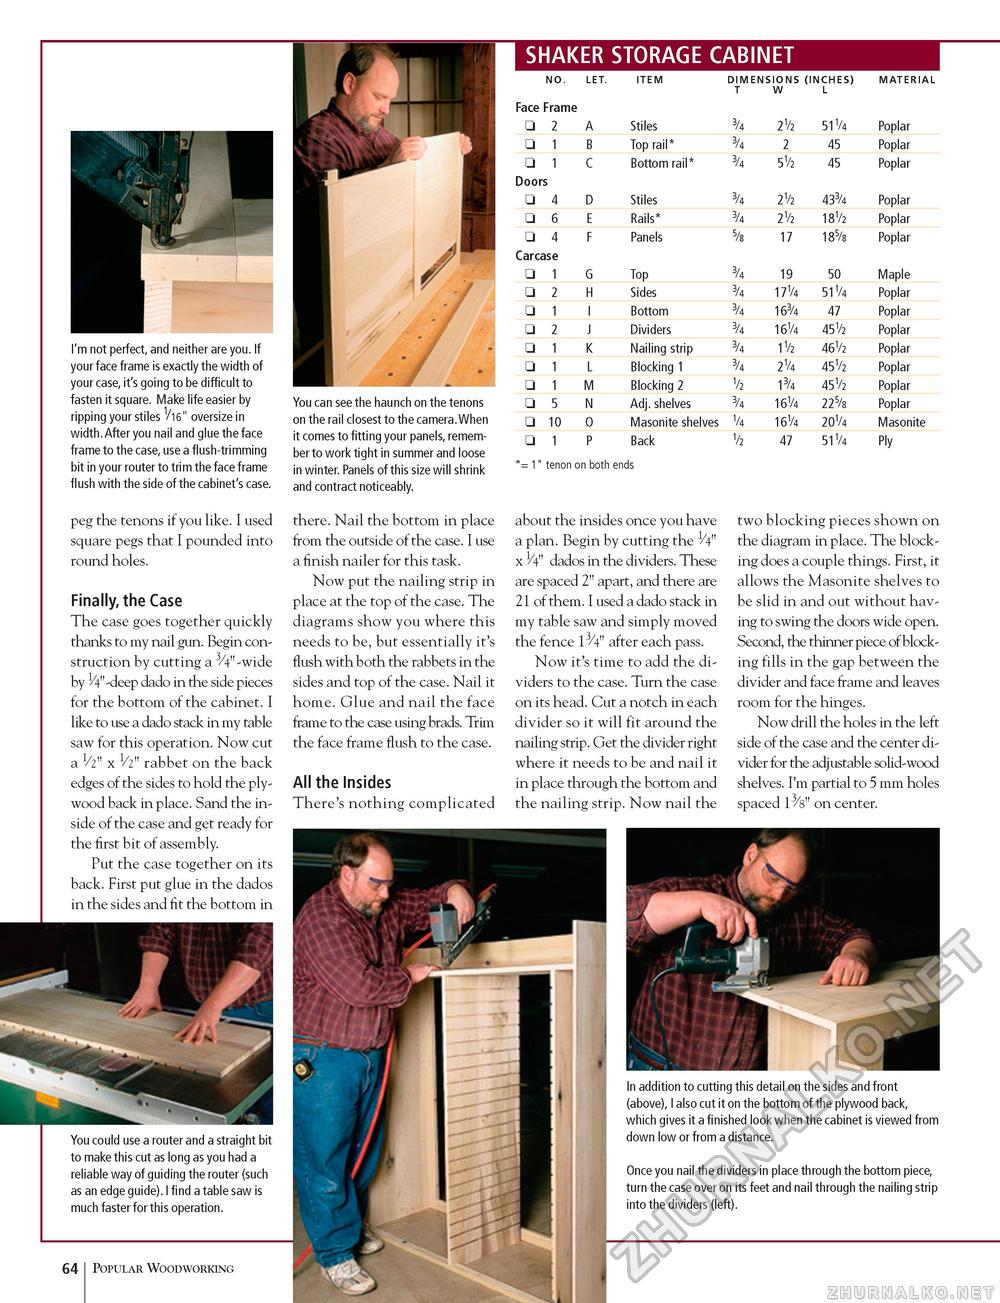 Popular Woodworking 2002-04  127,  64